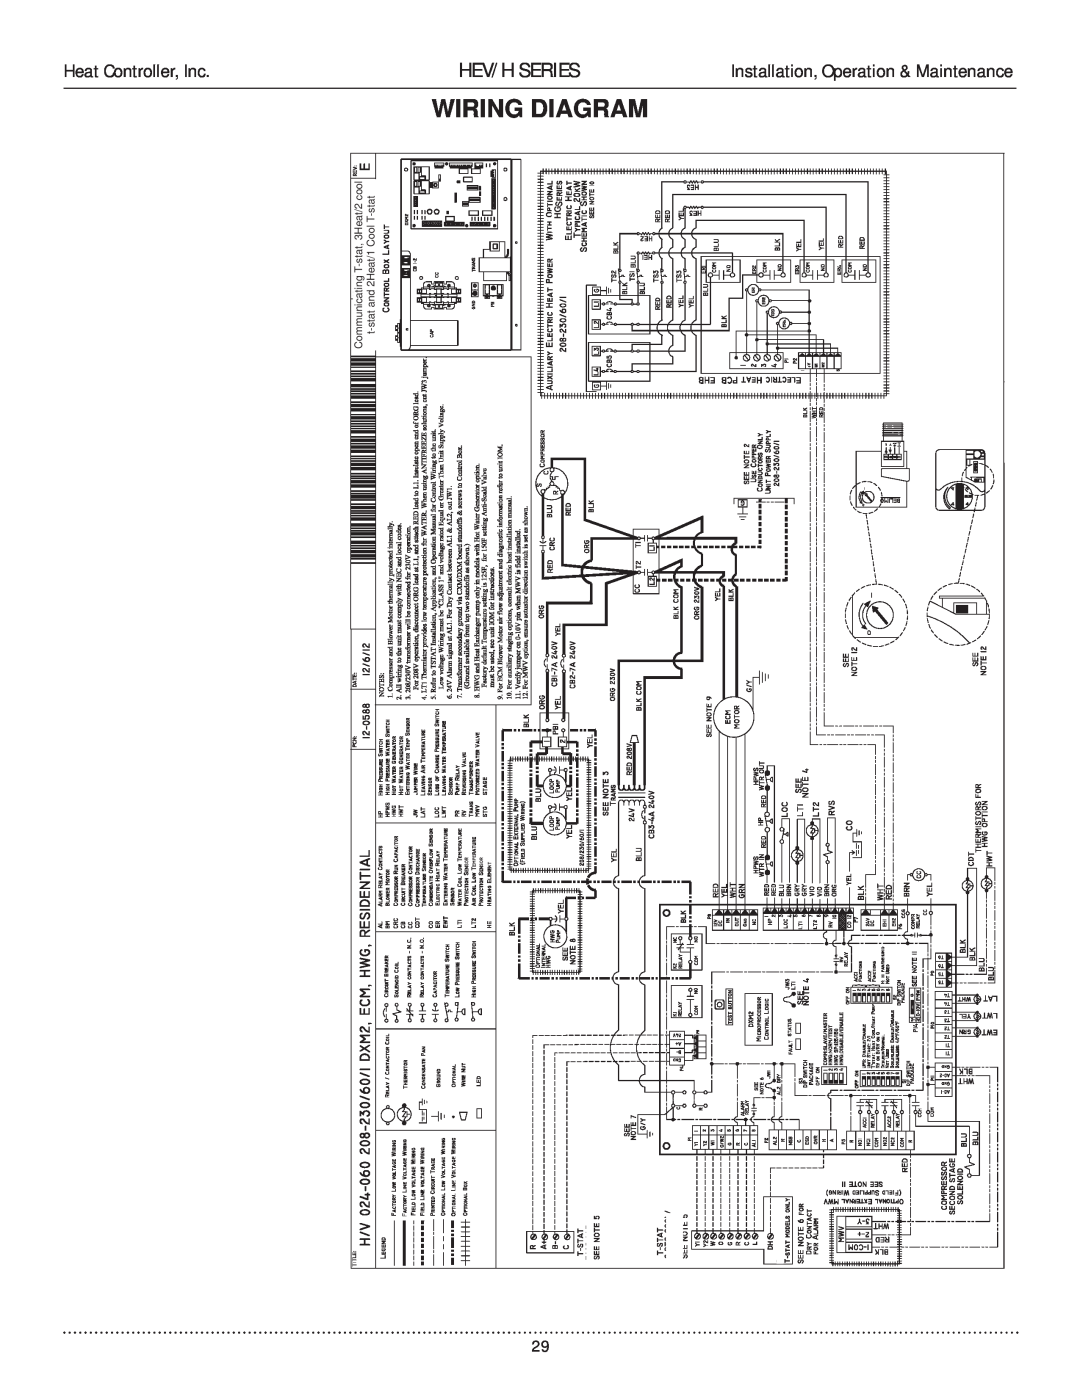 Heat Controller HEV/H manual Wiring Diagram, Hev/H Series, Heat Controller, Inc, Installation, Operation & Maintenance 